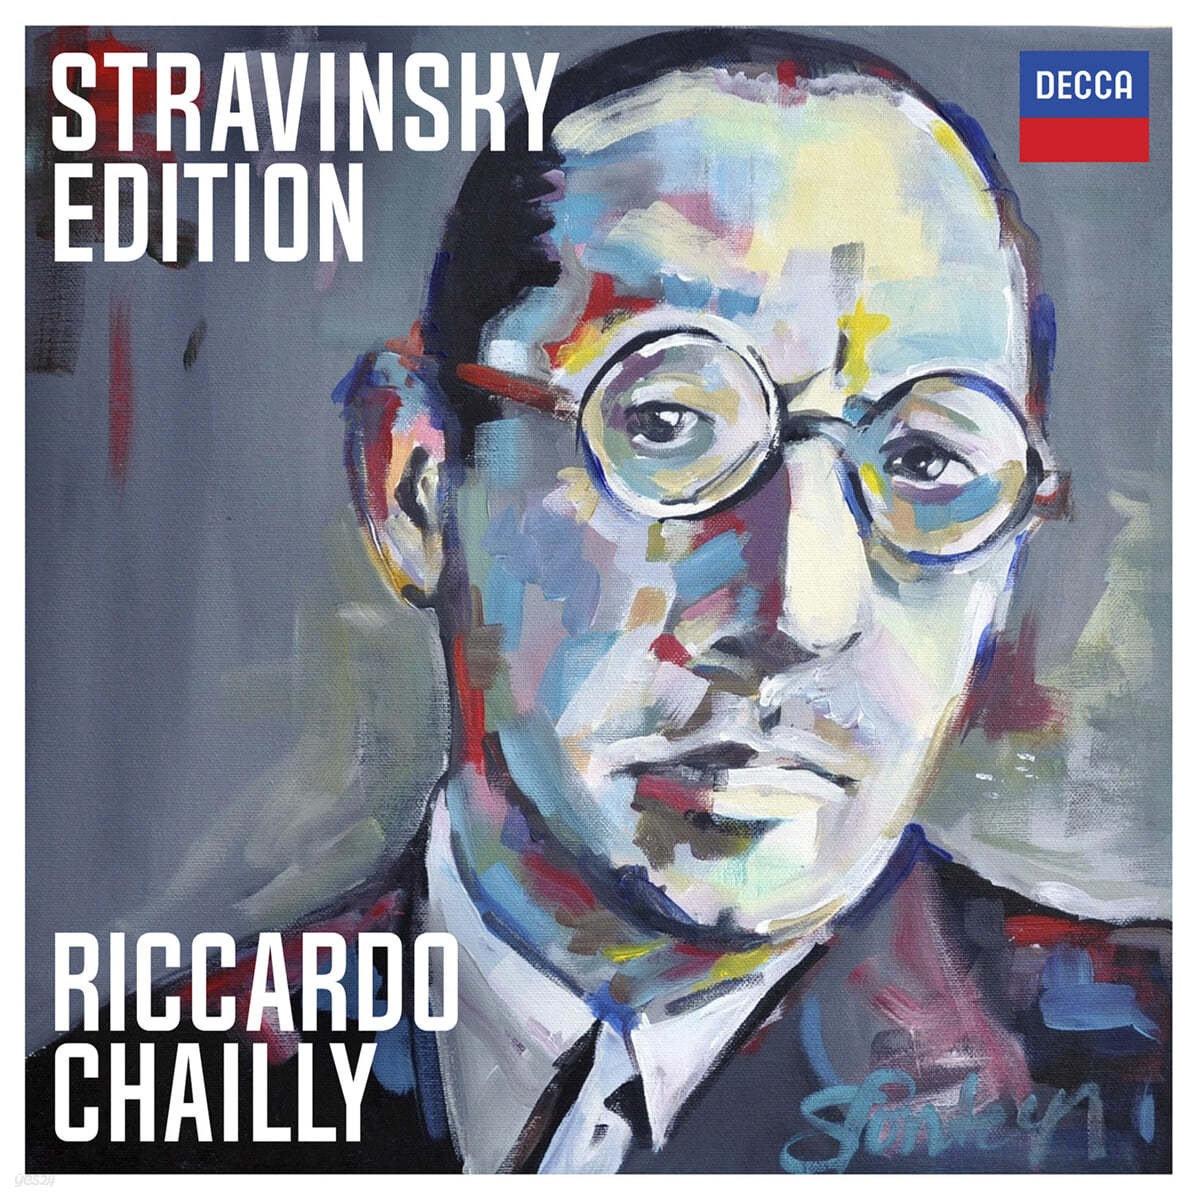 Riccardo Chailly 리카르도 샤이 - 스트라빈스키 에디션 (Stravinsky Edition - The Complete Recordings)